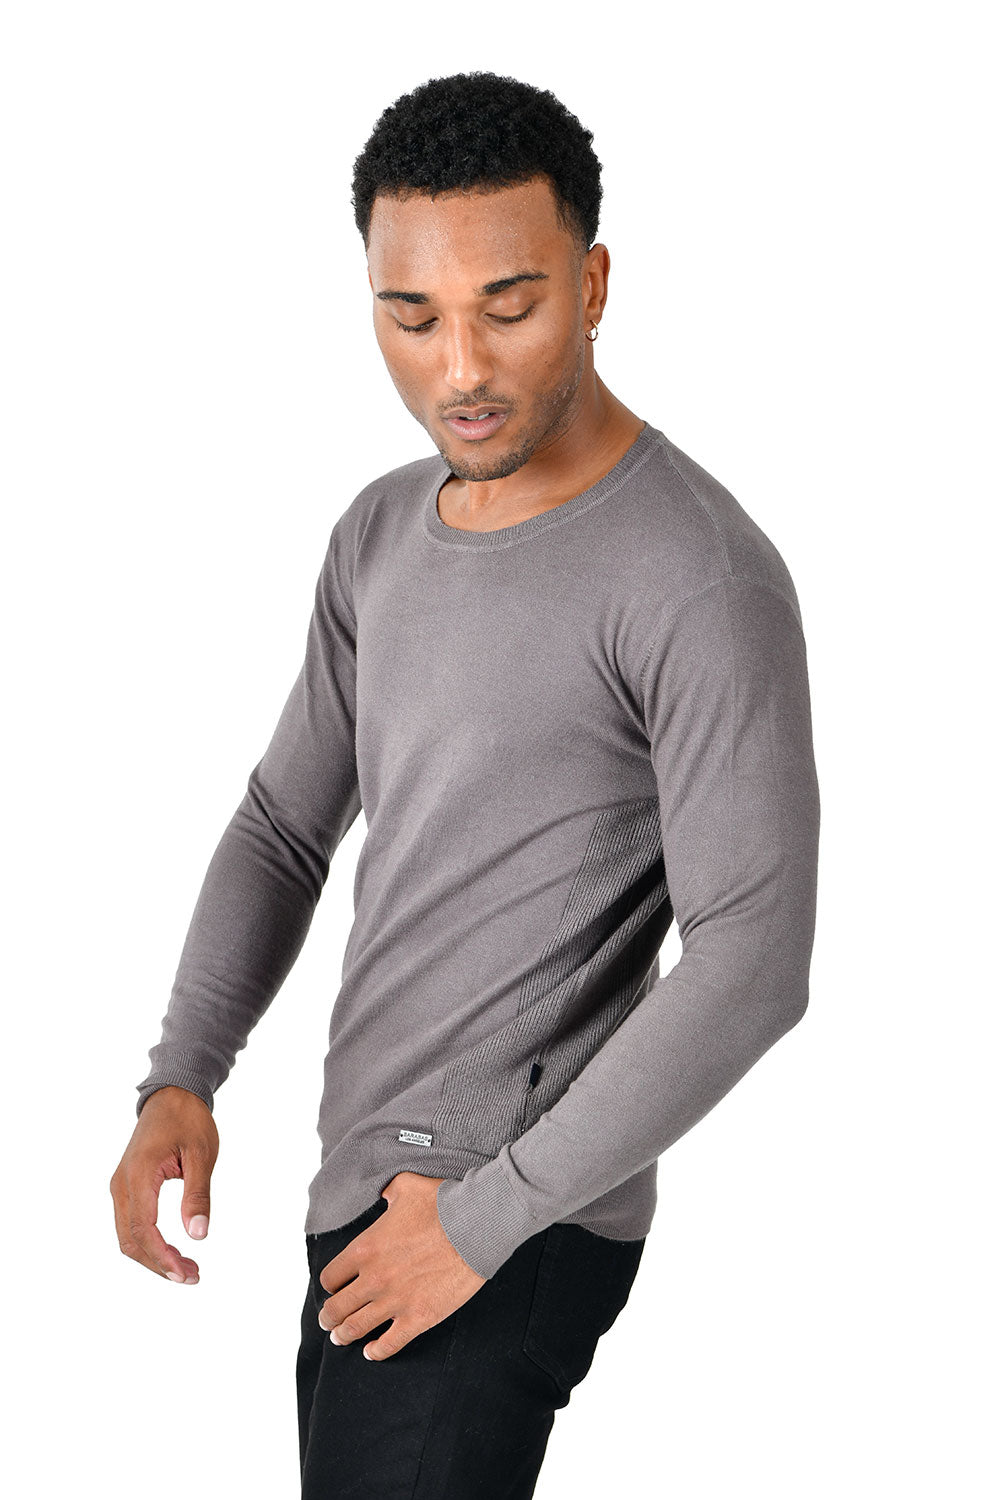 BARABAS Men's Crew Neck Ribbed Solid Color Basic Sweater LS2101 Grey 